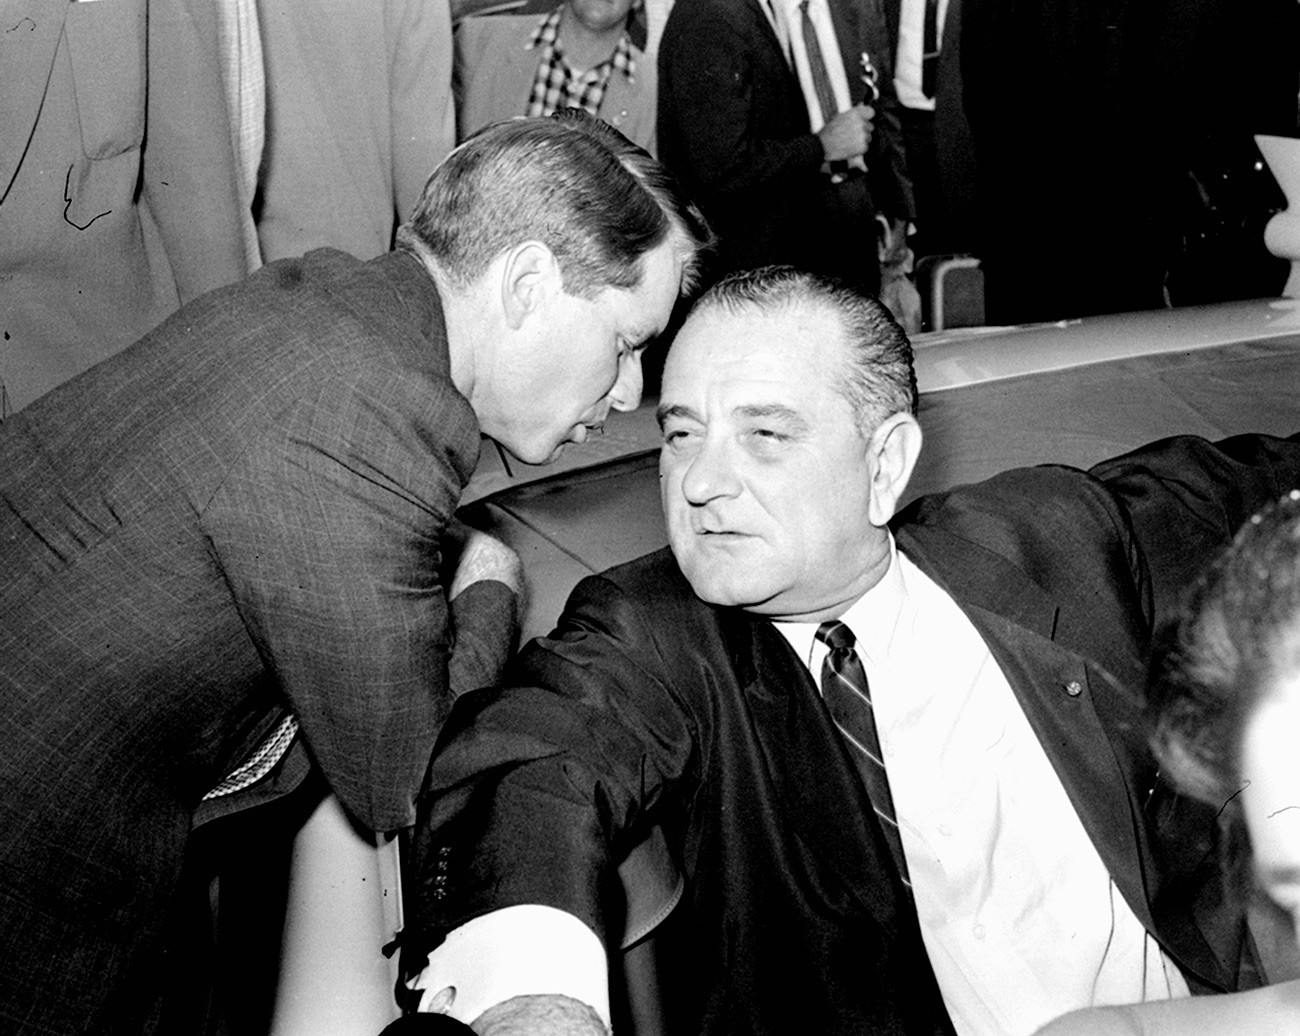 Robert Kennedy and Lyndon B. Johnson